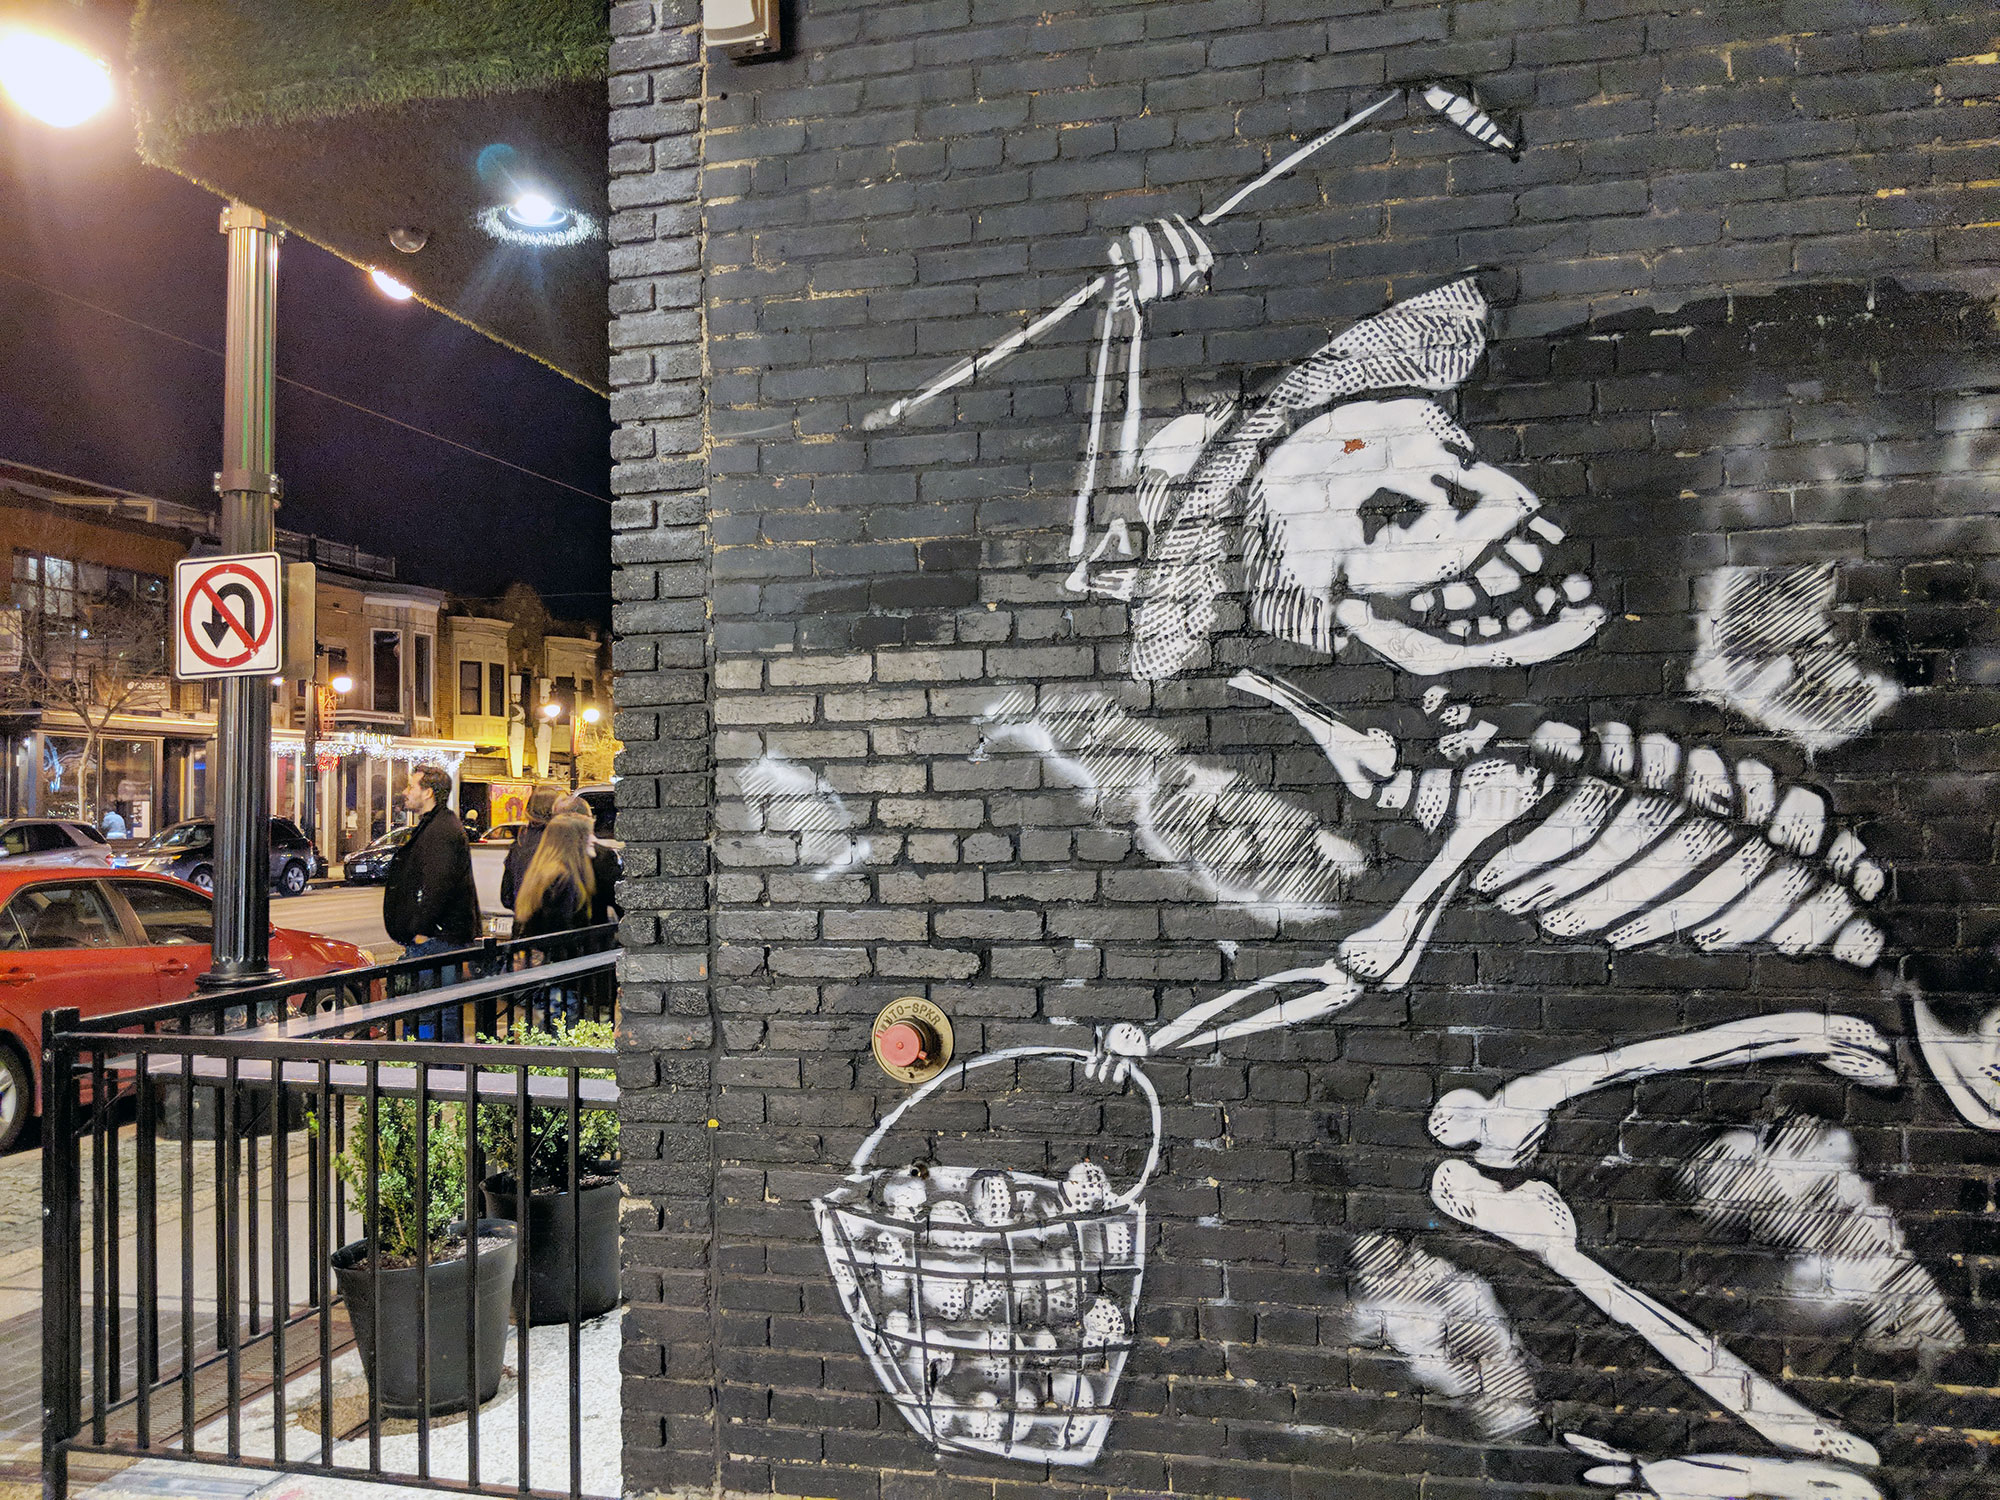 Street art in the H Street neighborhood of Washington D.C.